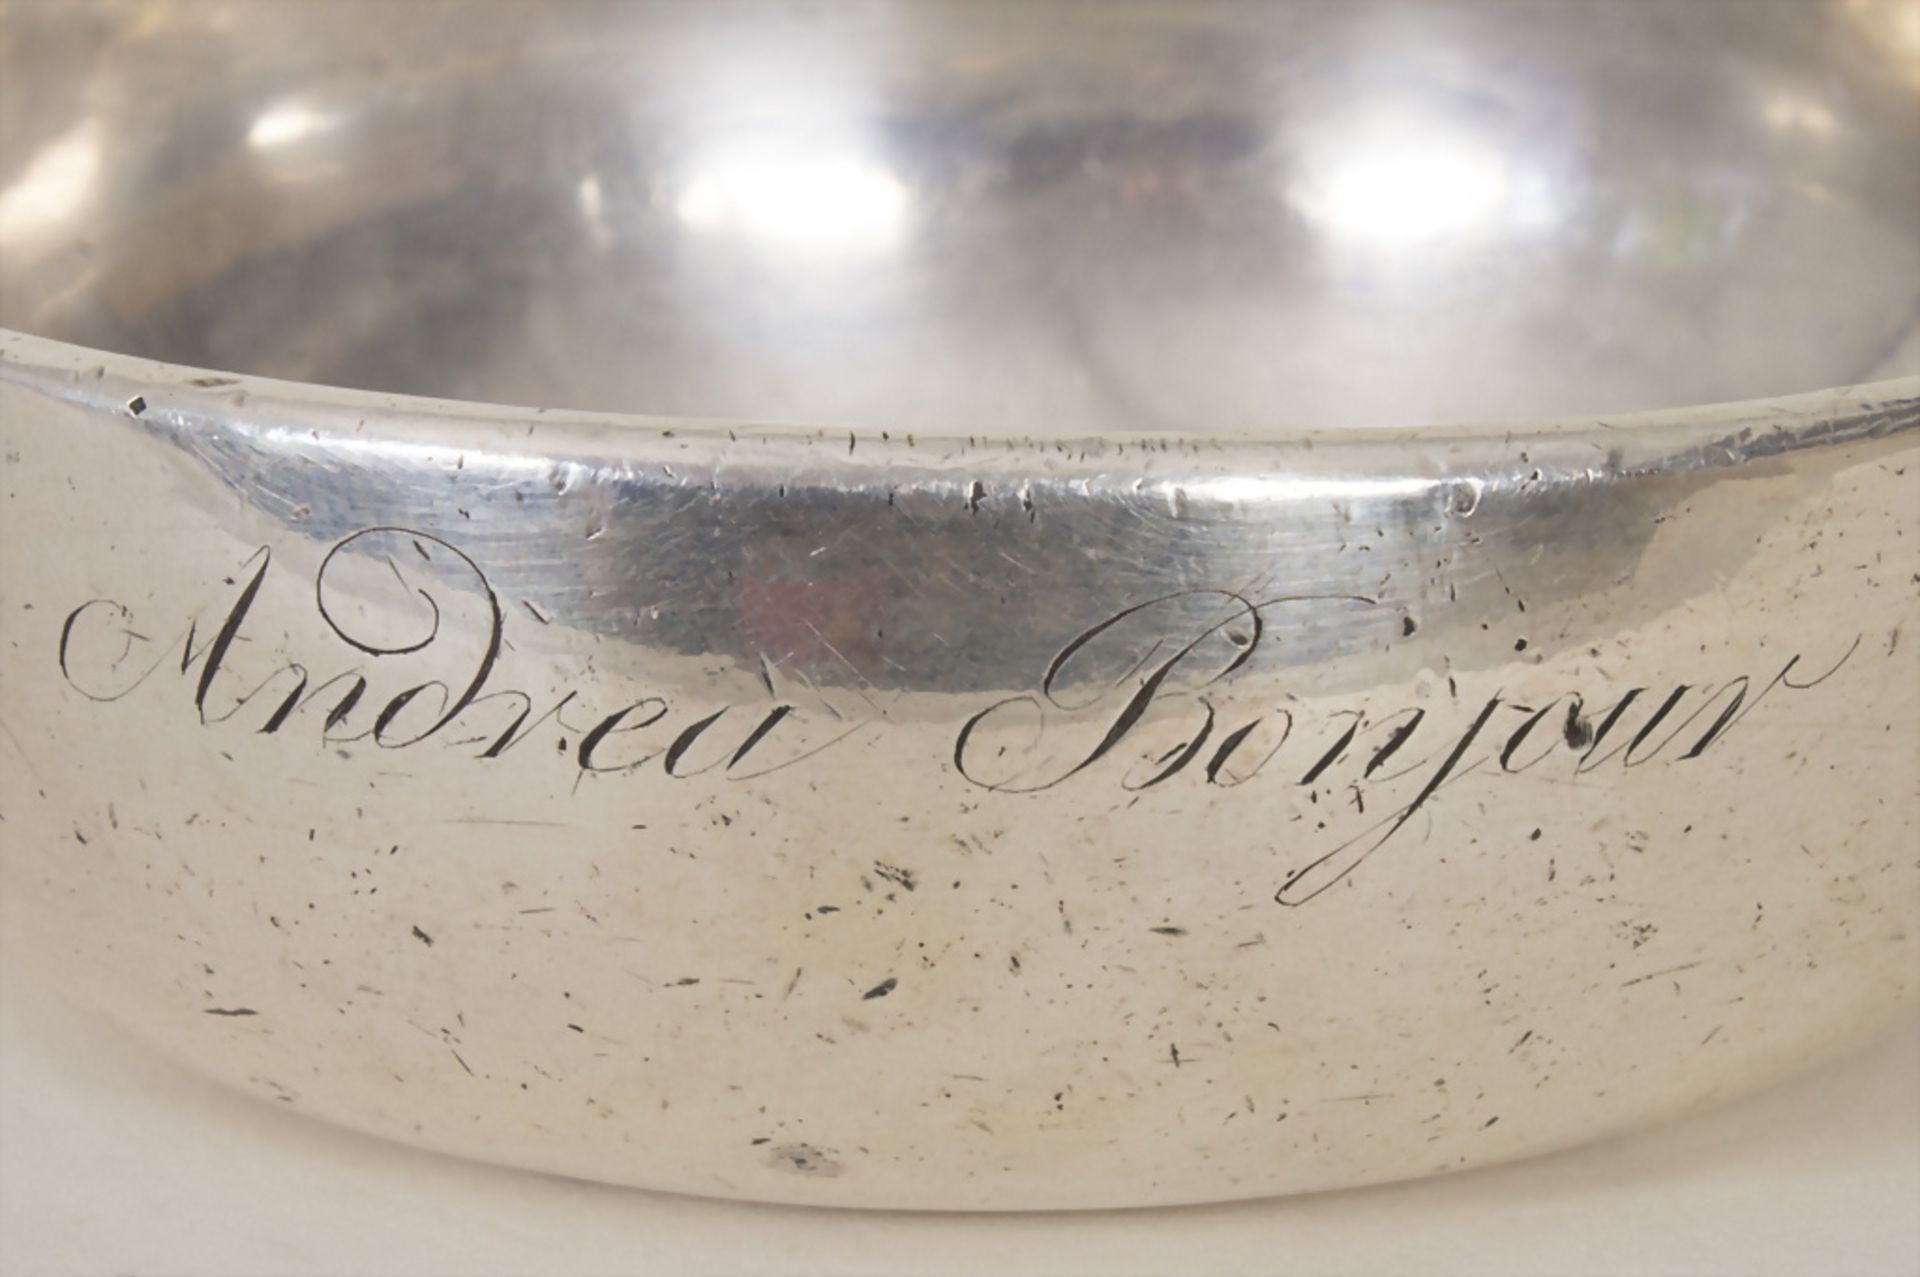 Weinprobierschale / A test vin / A silver wine tasting bowl, Pierre-Jean Meunier, Paris, um 1820 - Bild 2 aus 5